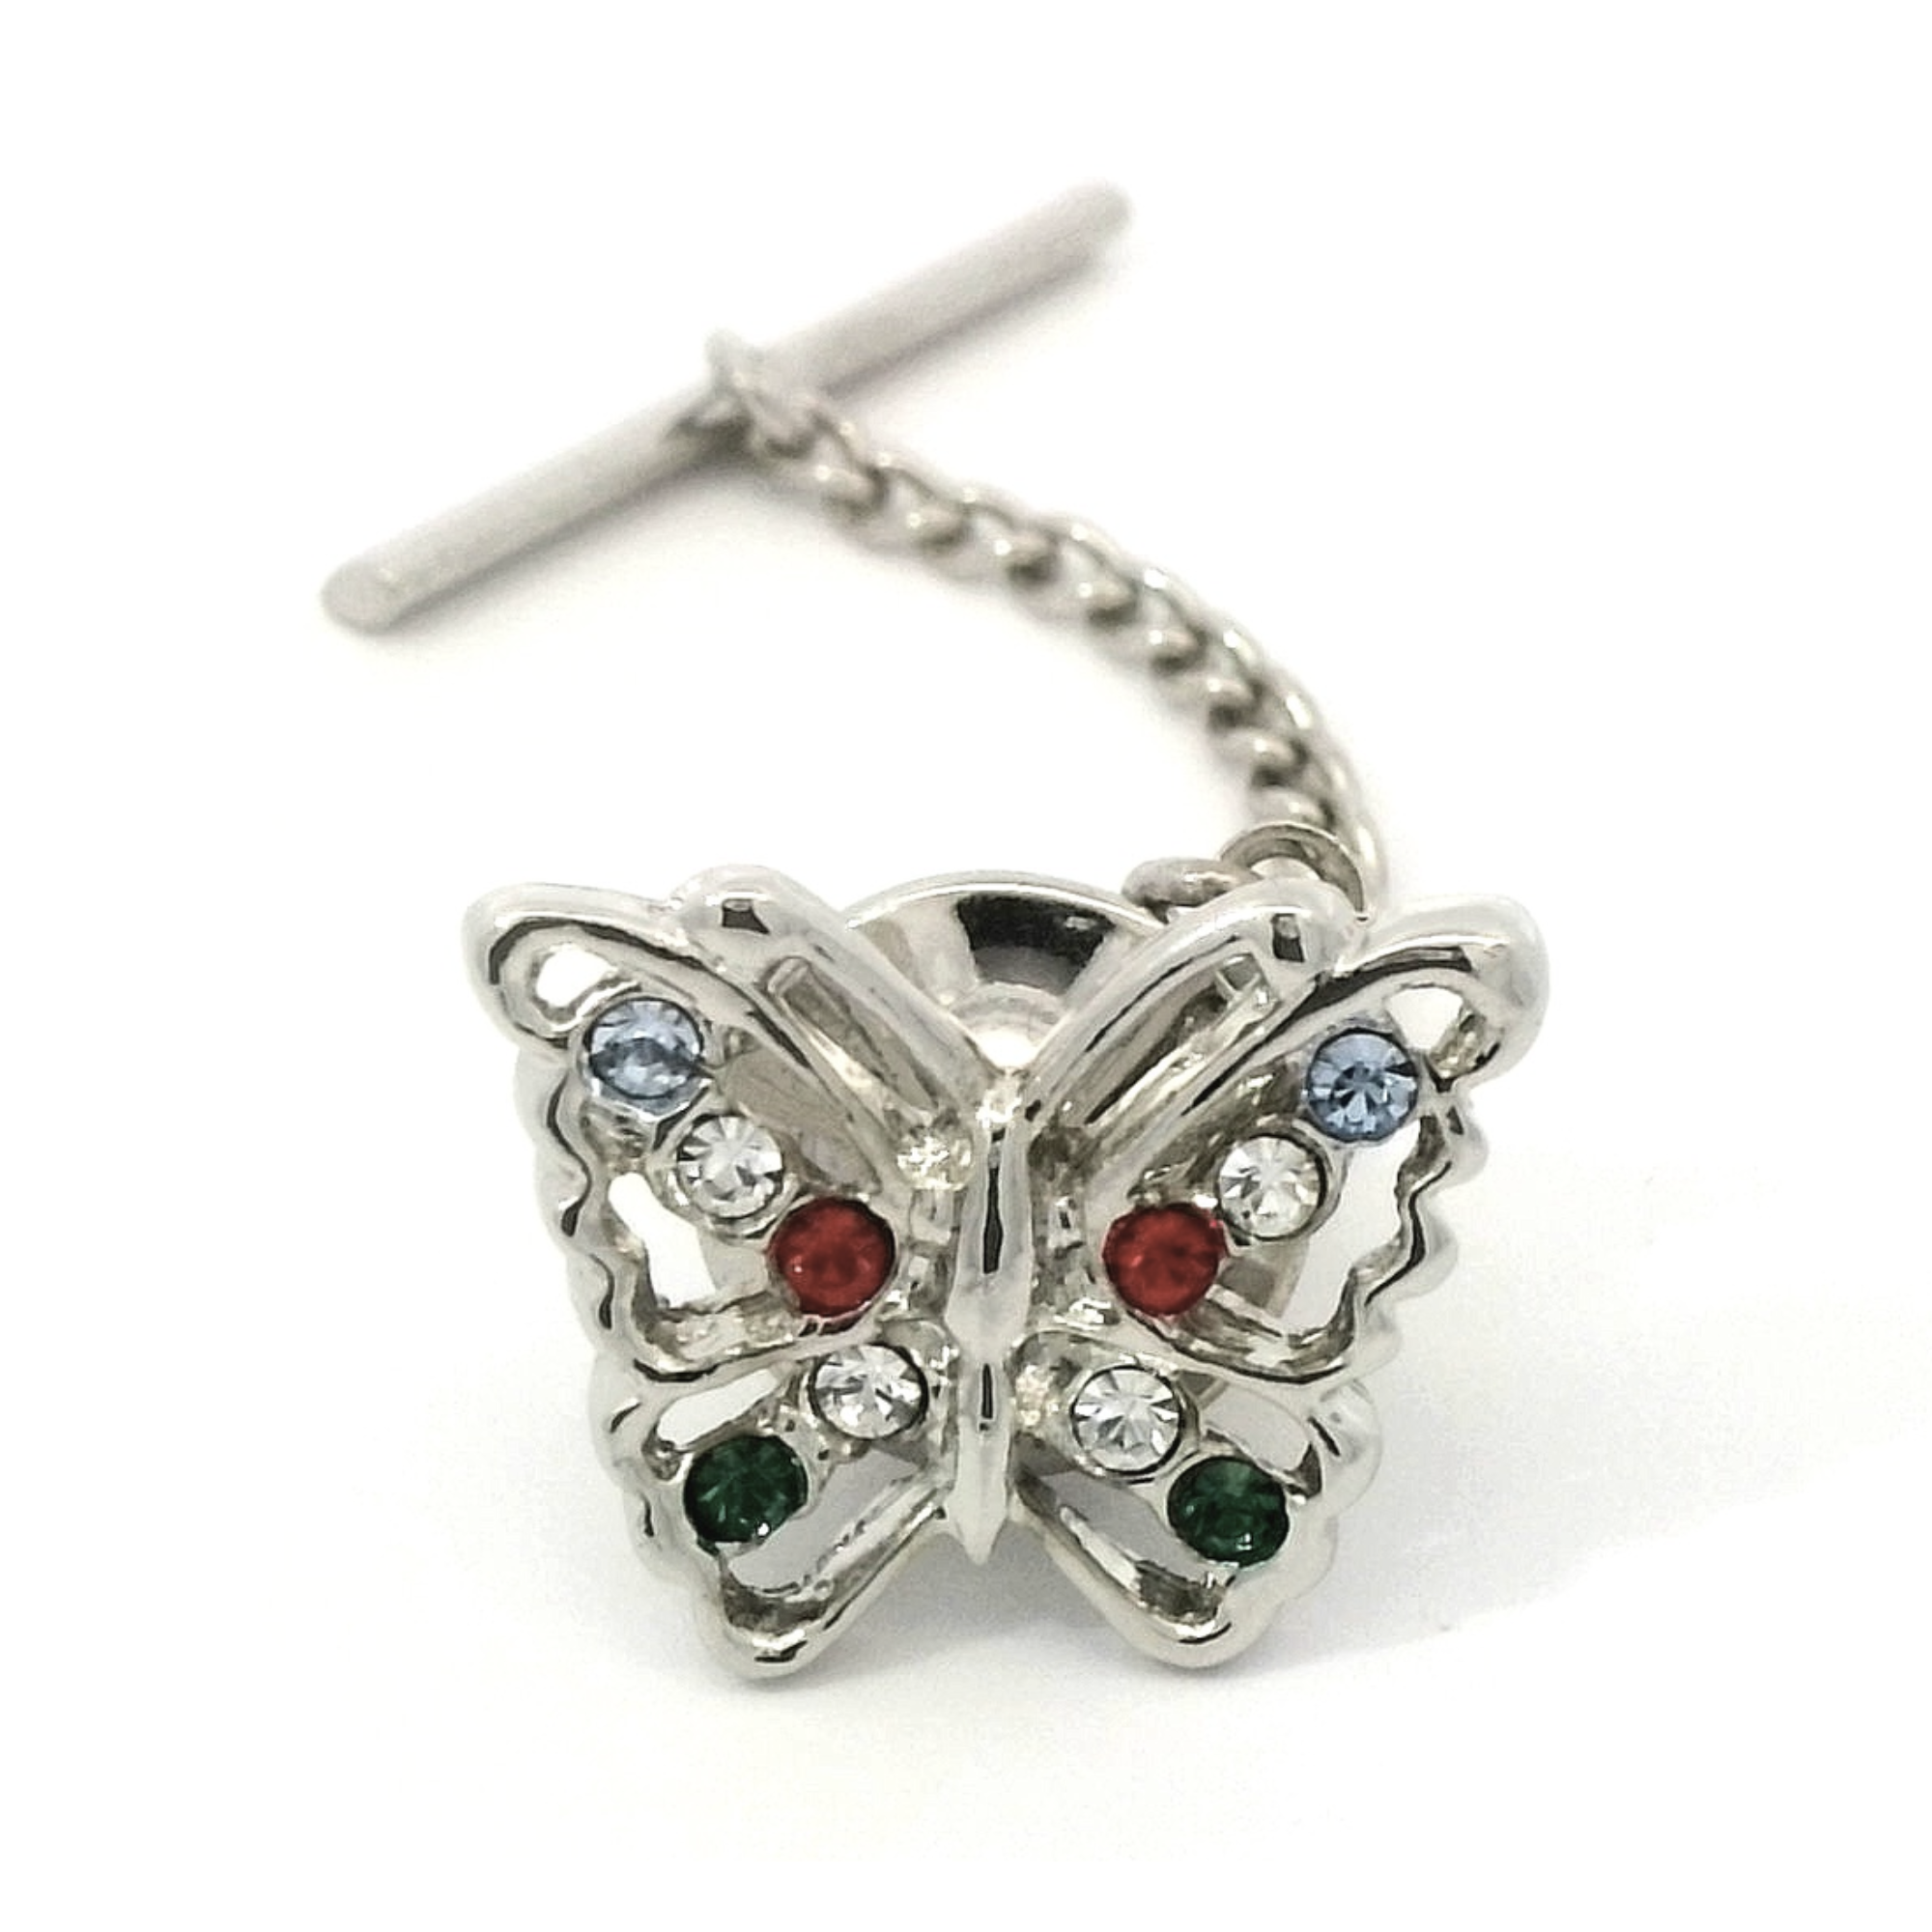 Butterfly Design Tie Pin featuring Swarovski Crystals